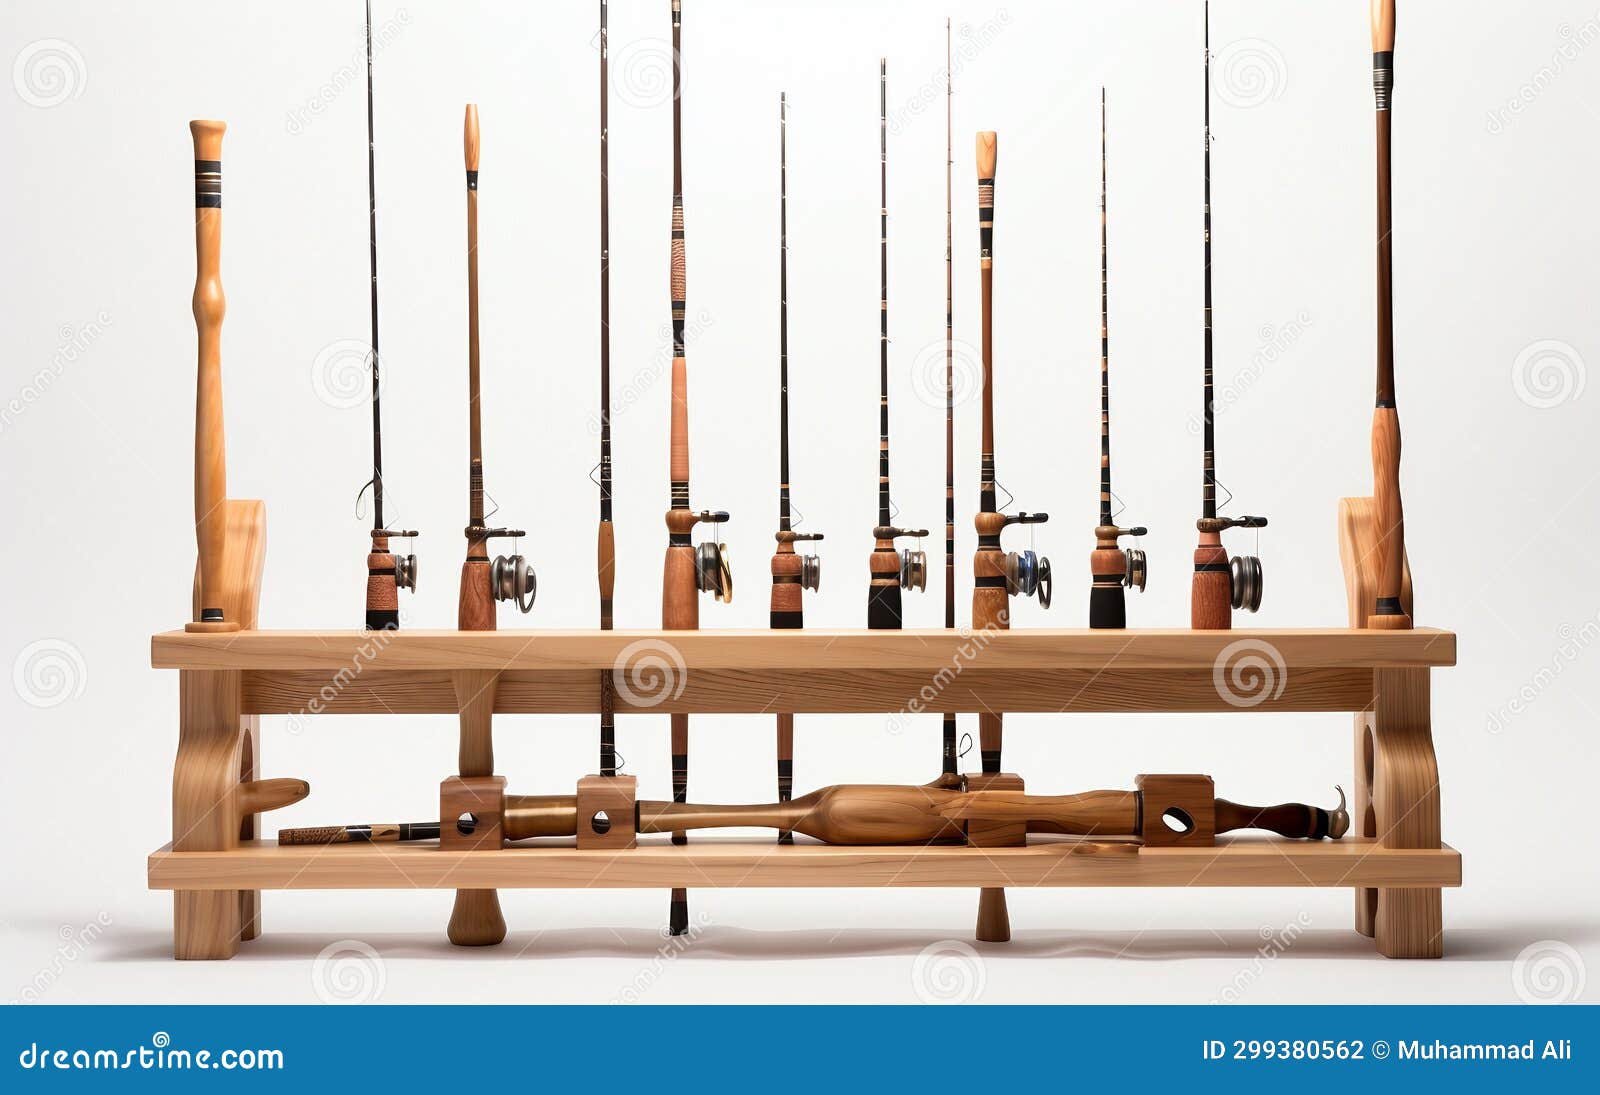 Wooden Fishing Rod Rack on White Background Stock Illustration